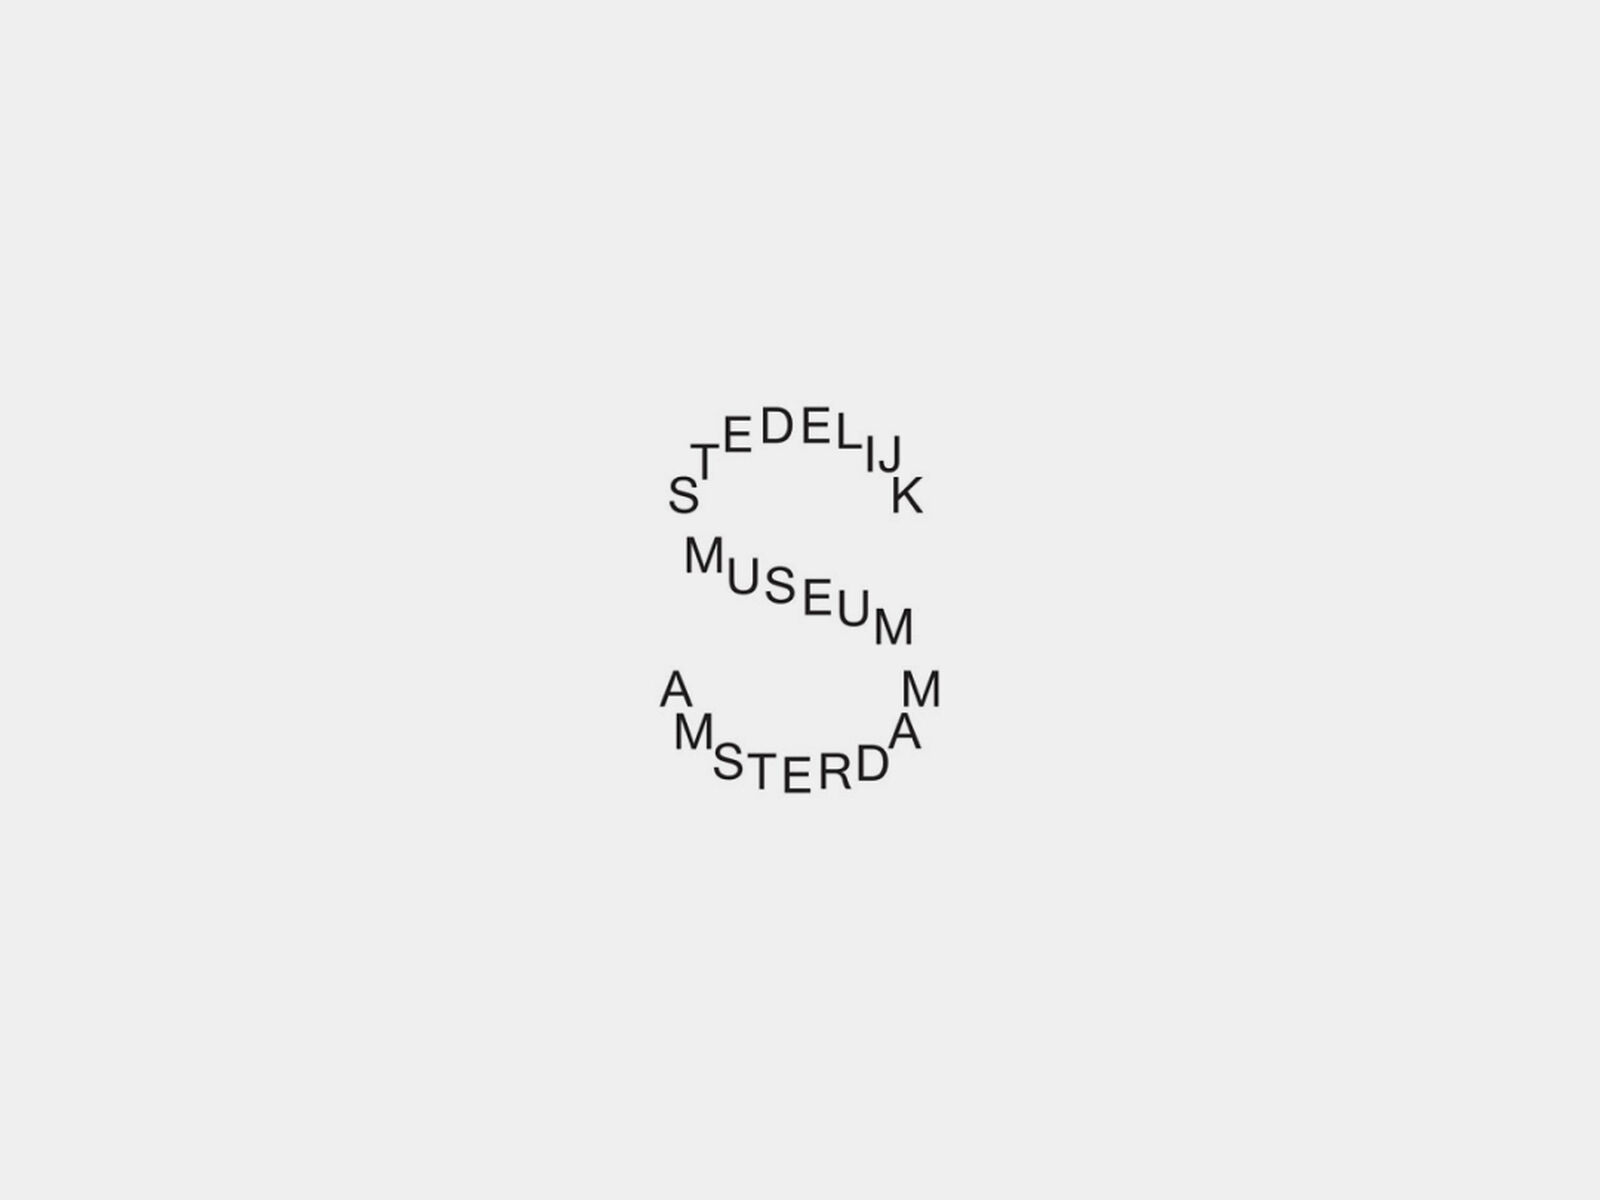 FLOS_Museum-Exhibition_Stedelijk-Amsterdam